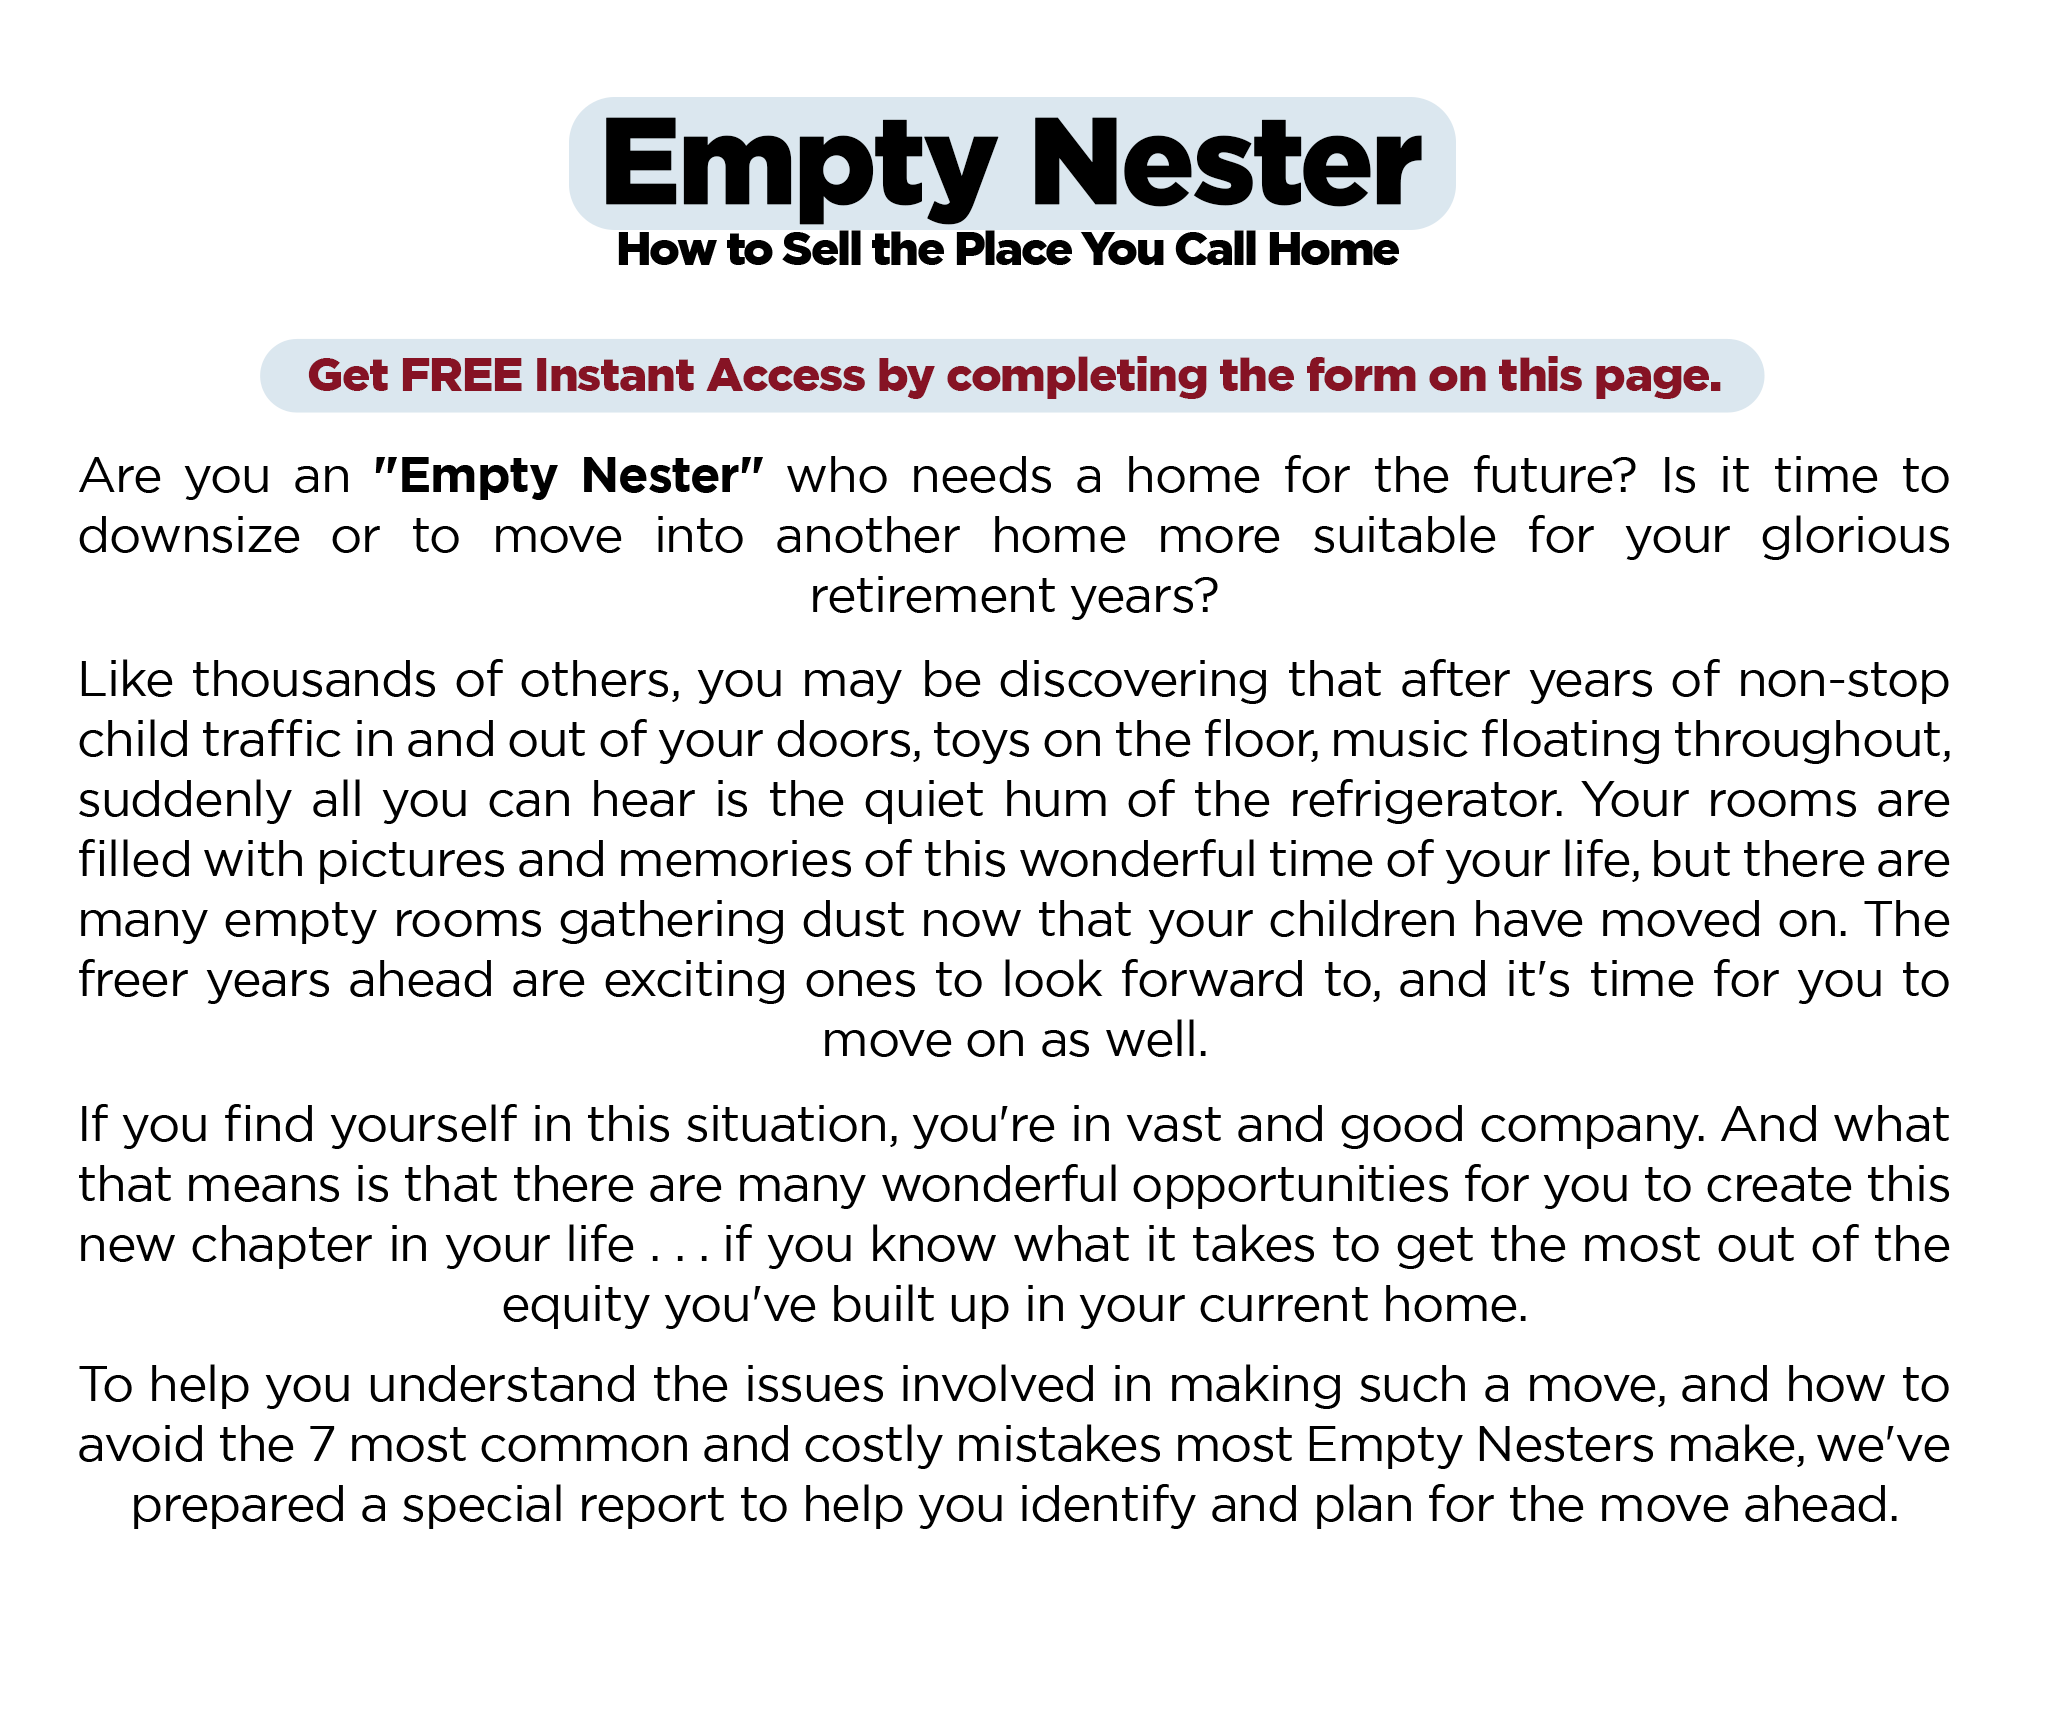 EMPTY NEST SELLER TEASER TEXT.png